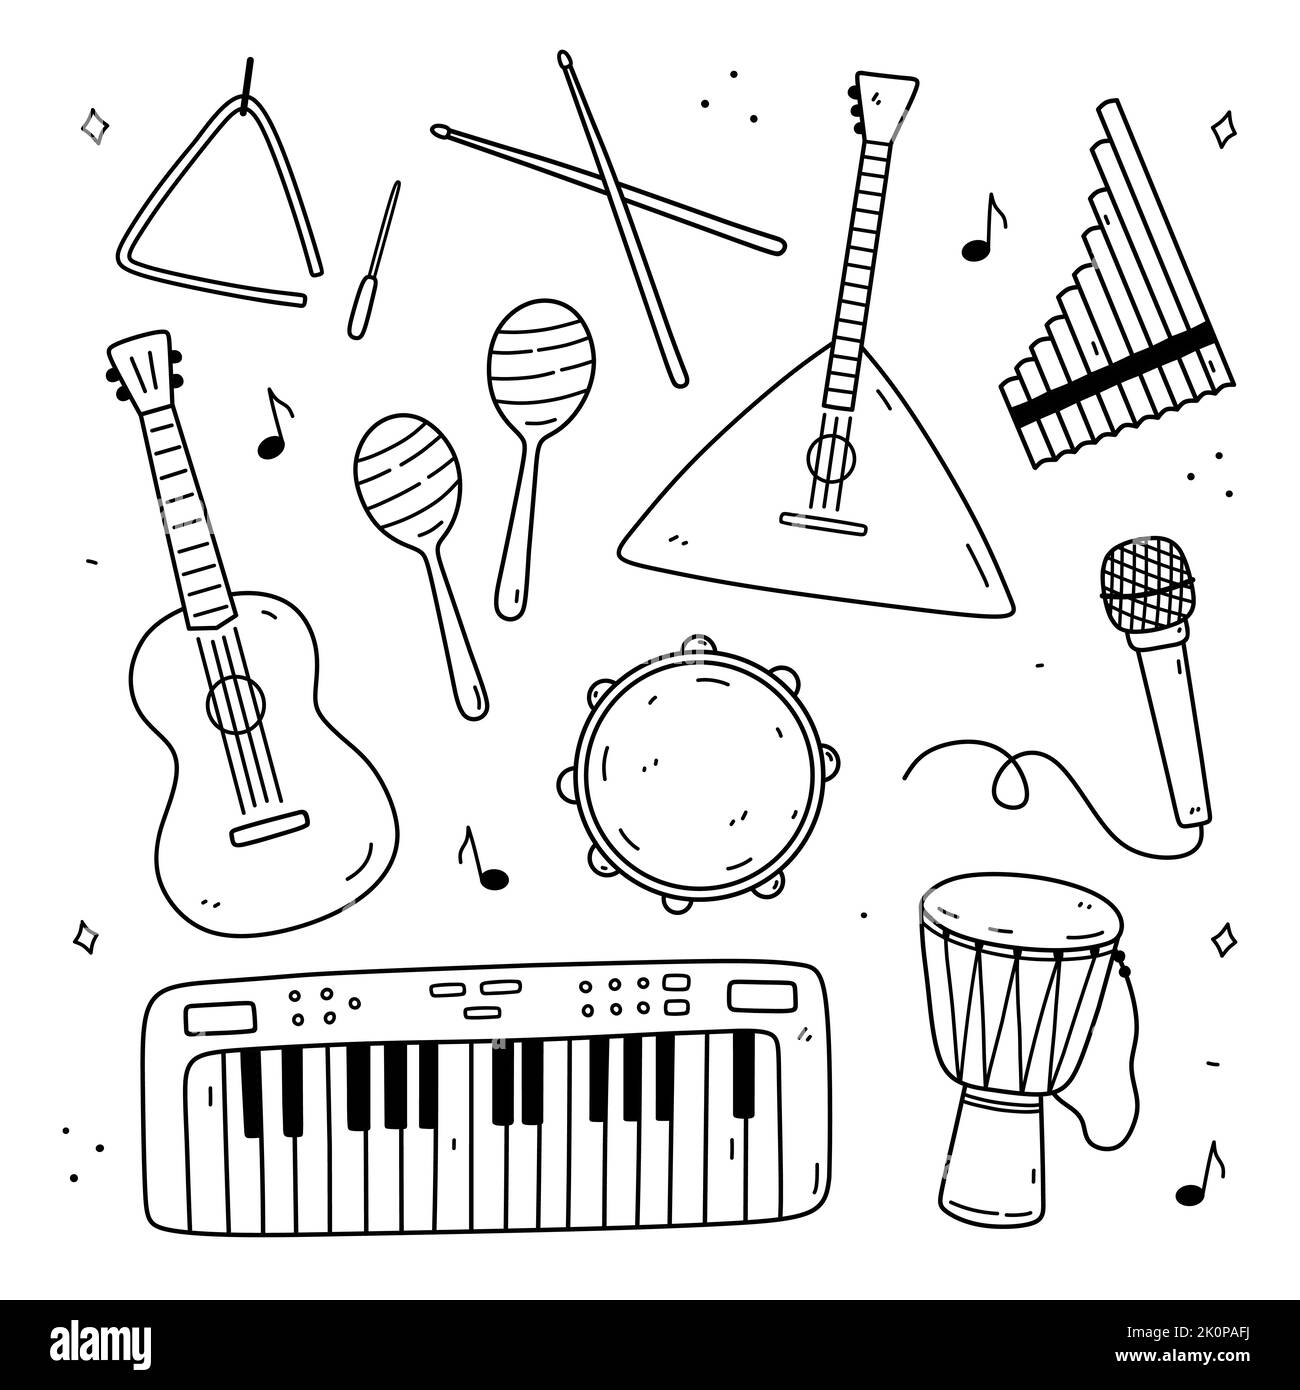 Cute doodle set of musical instruments - triangle, drumsticks, balalaika, pan flute, guitar, maracas, tambourine, microphone, djembe drum, electronic keyboard. Vector hand-drawn illustration. Stock Vector